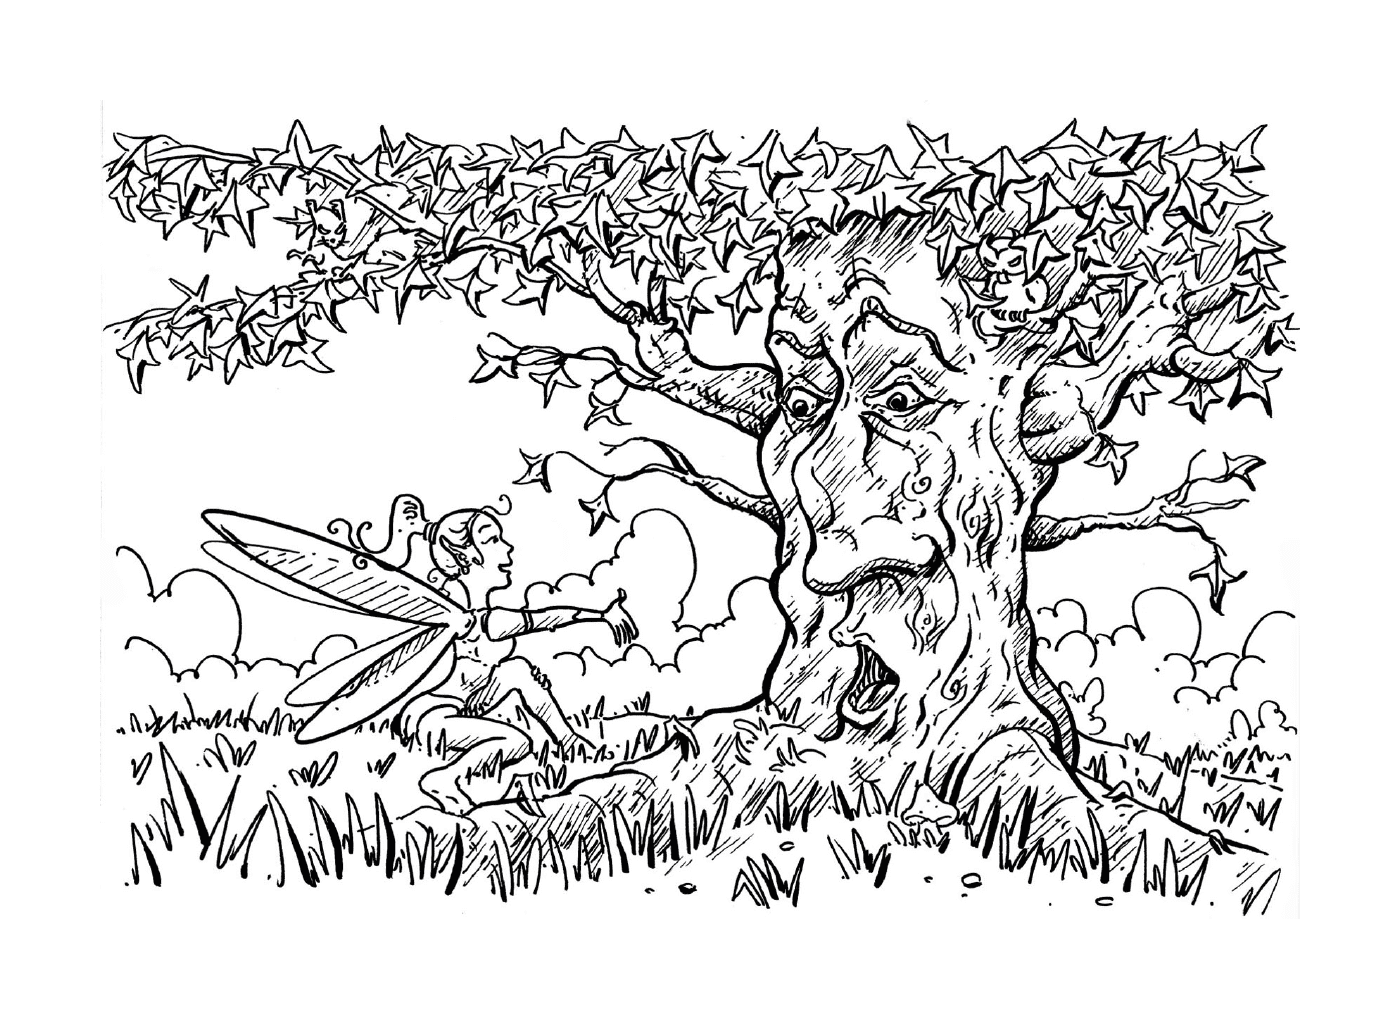  Un inchiostro, un uomo e un albero 